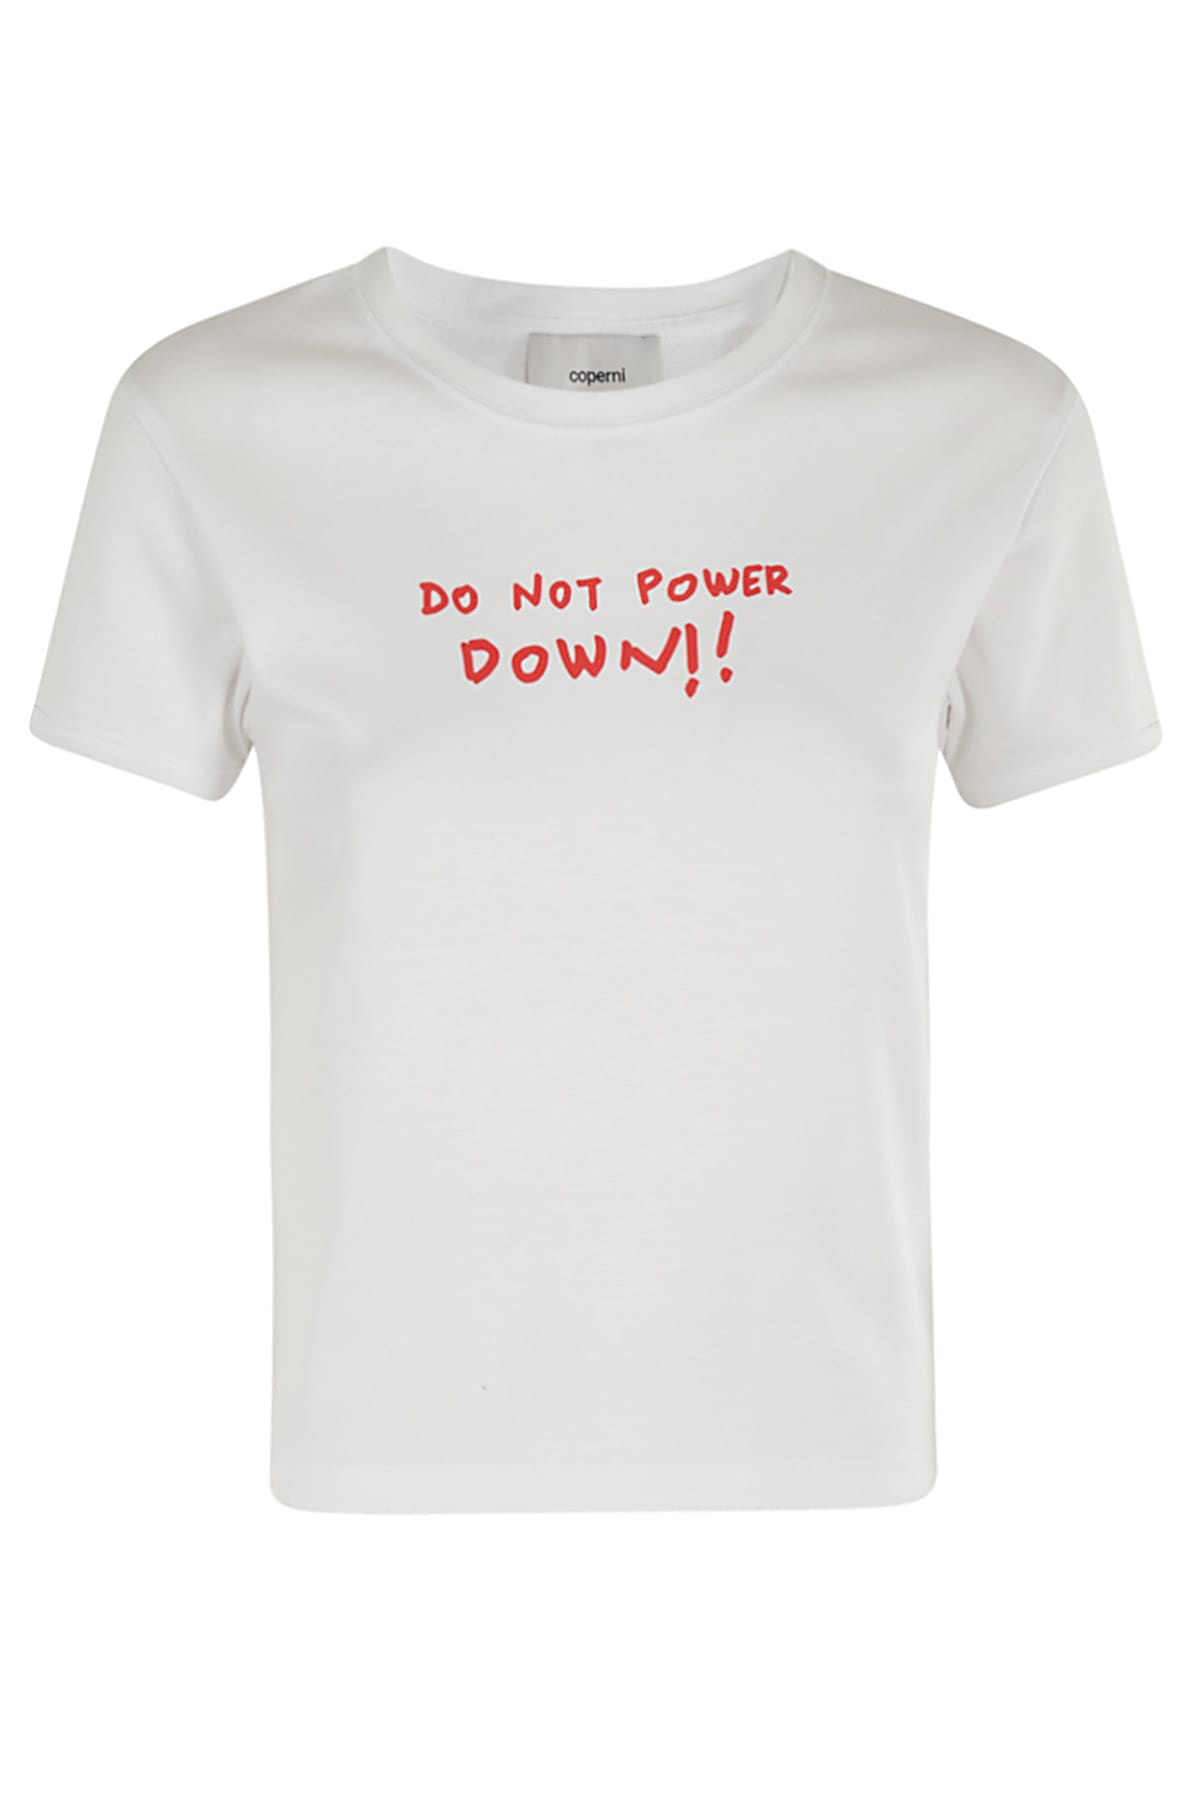 Power Down Slim Fit T Shirt